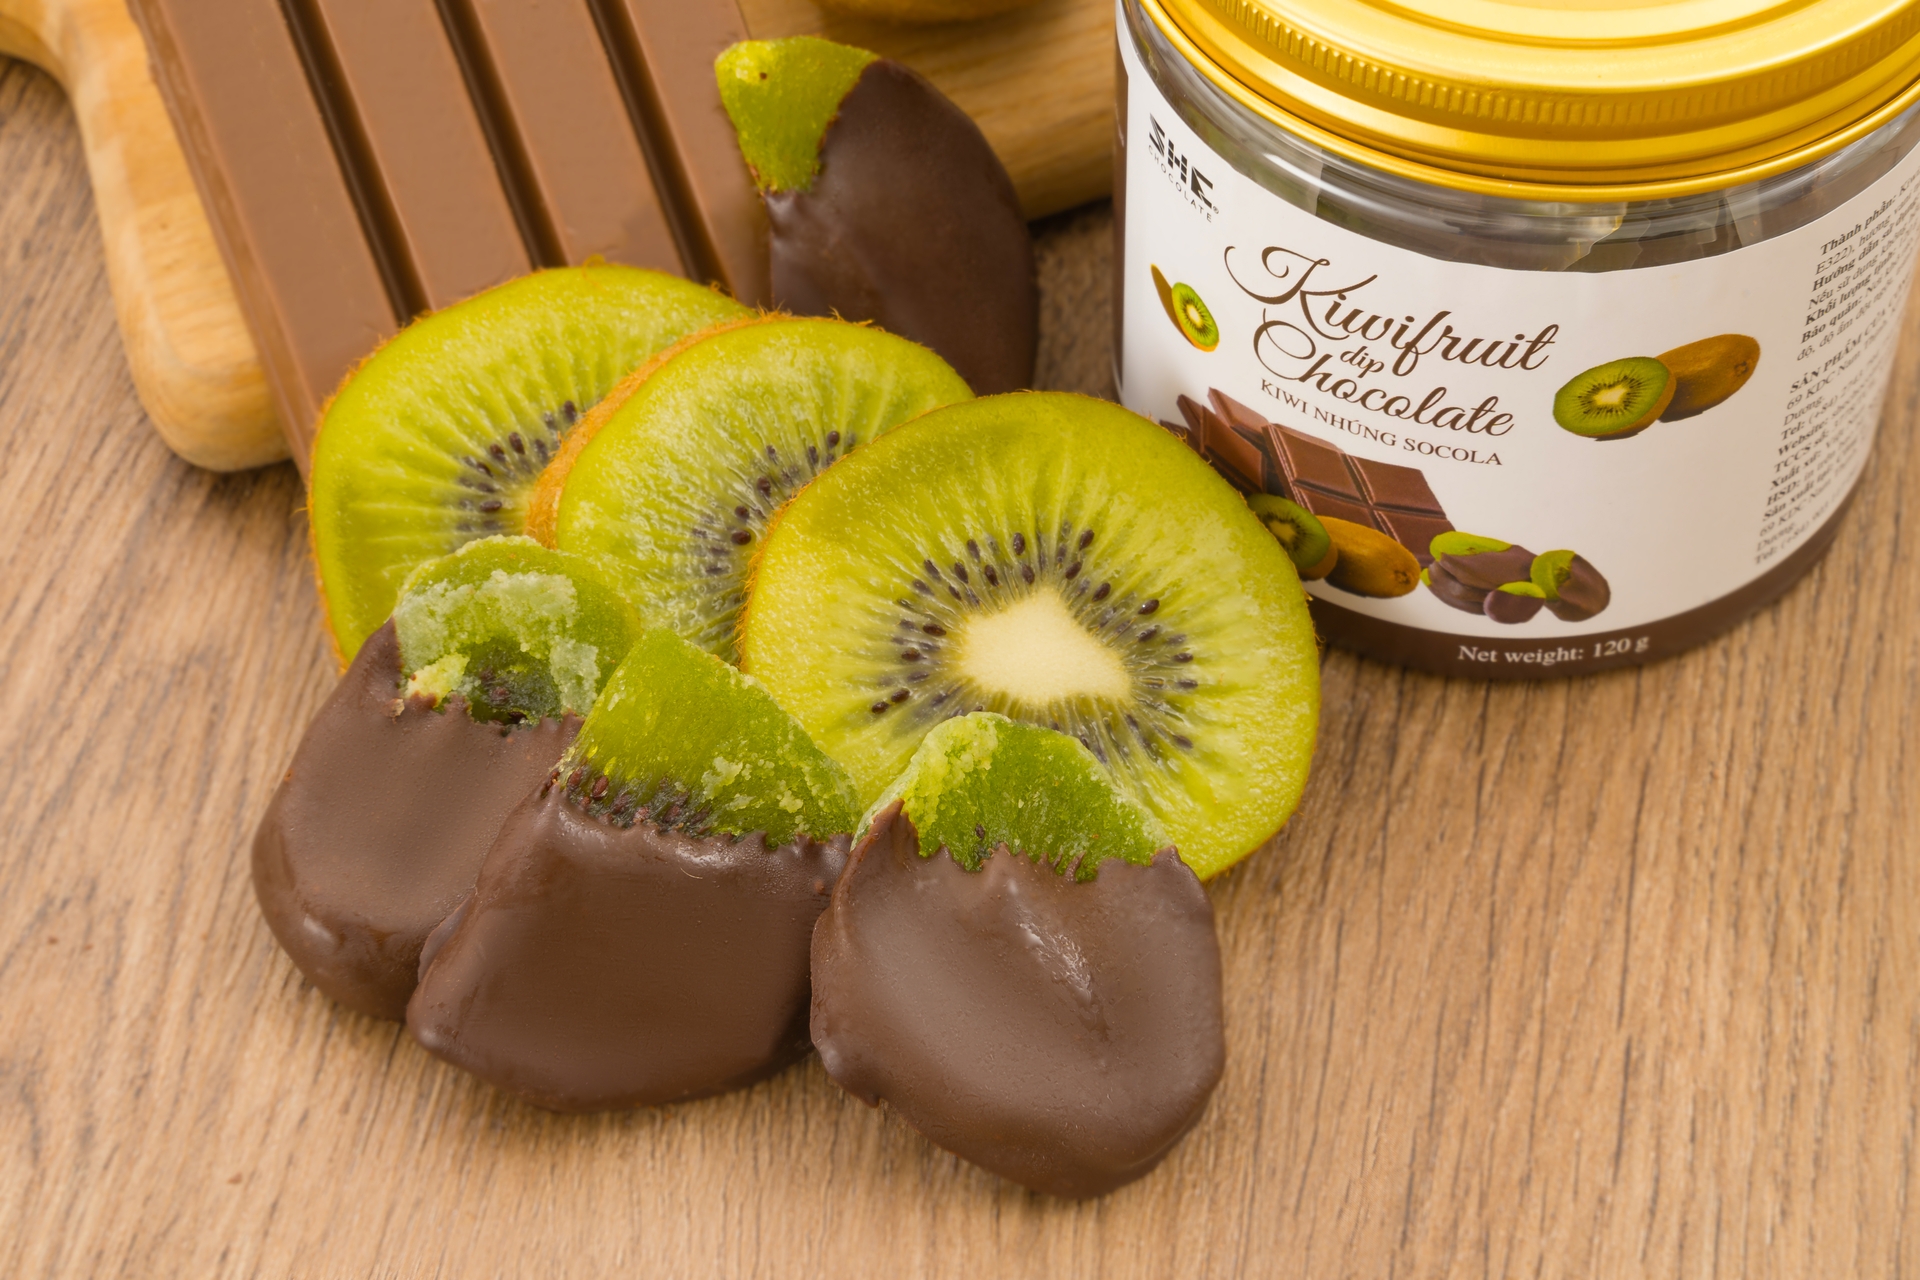 Socola Kiwi nhúng 120g (Hũ pet) - SHE Chocolate 